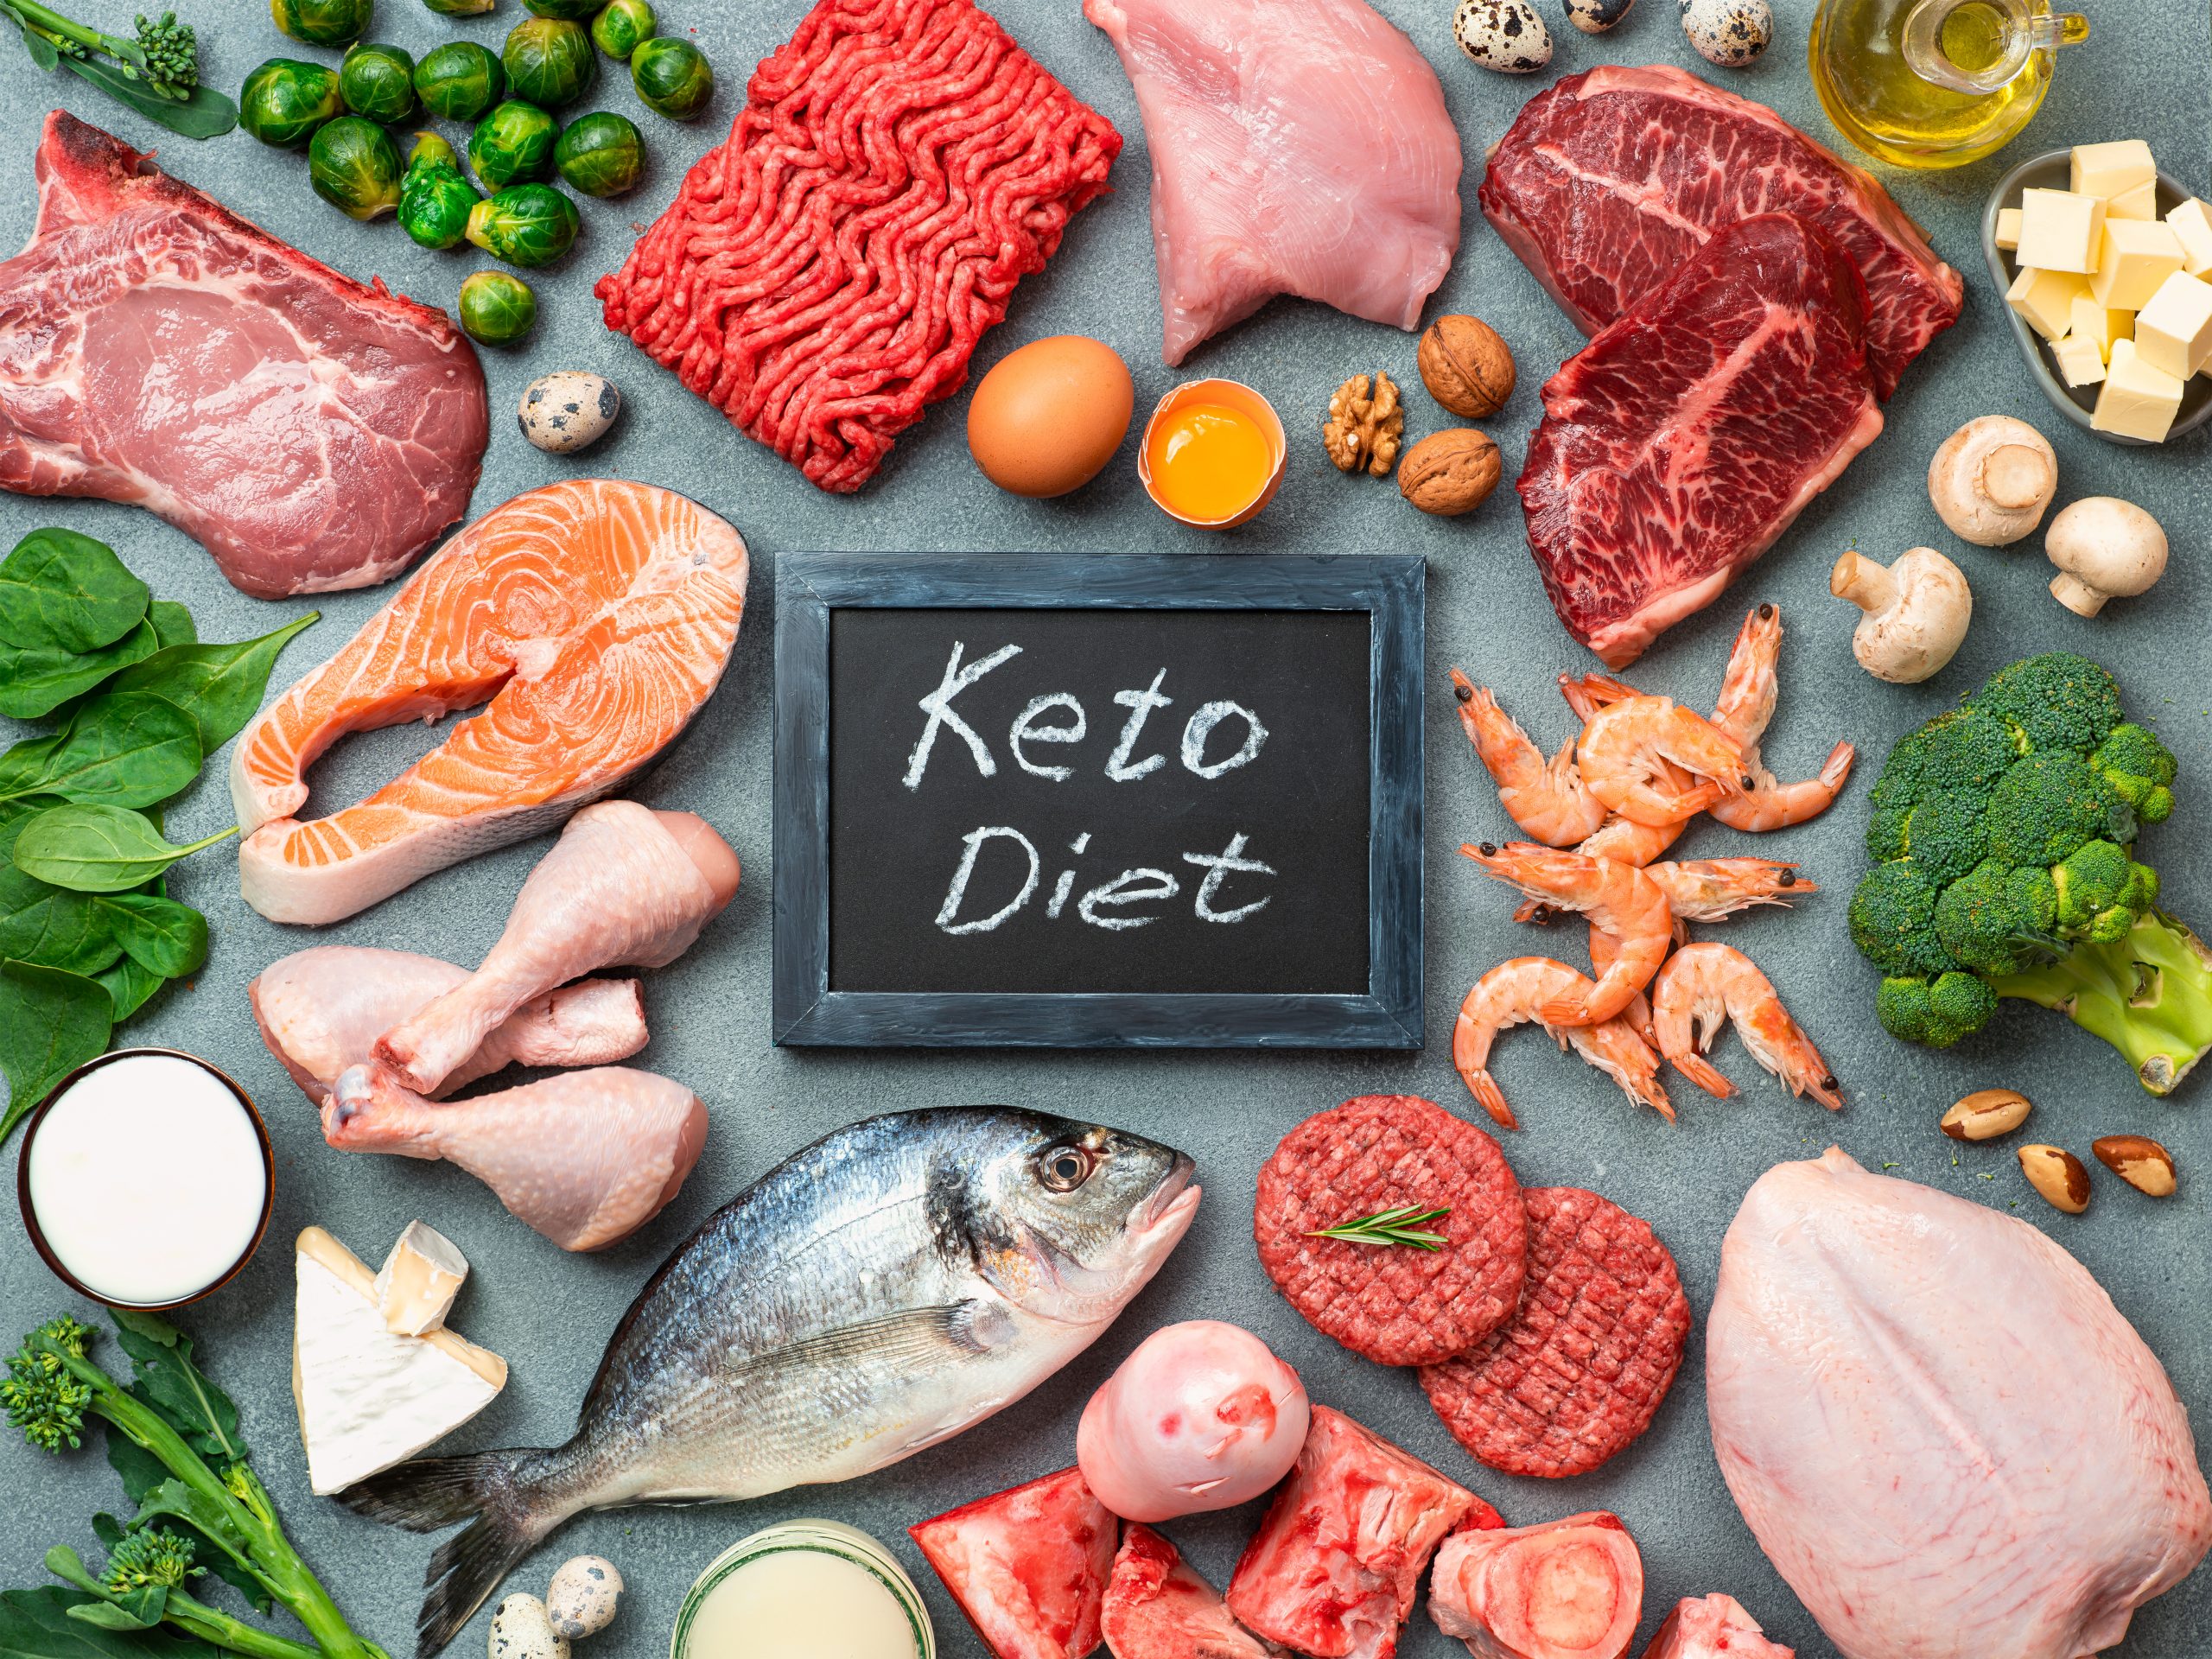 HMC nutritionist warns of 'keto trend'